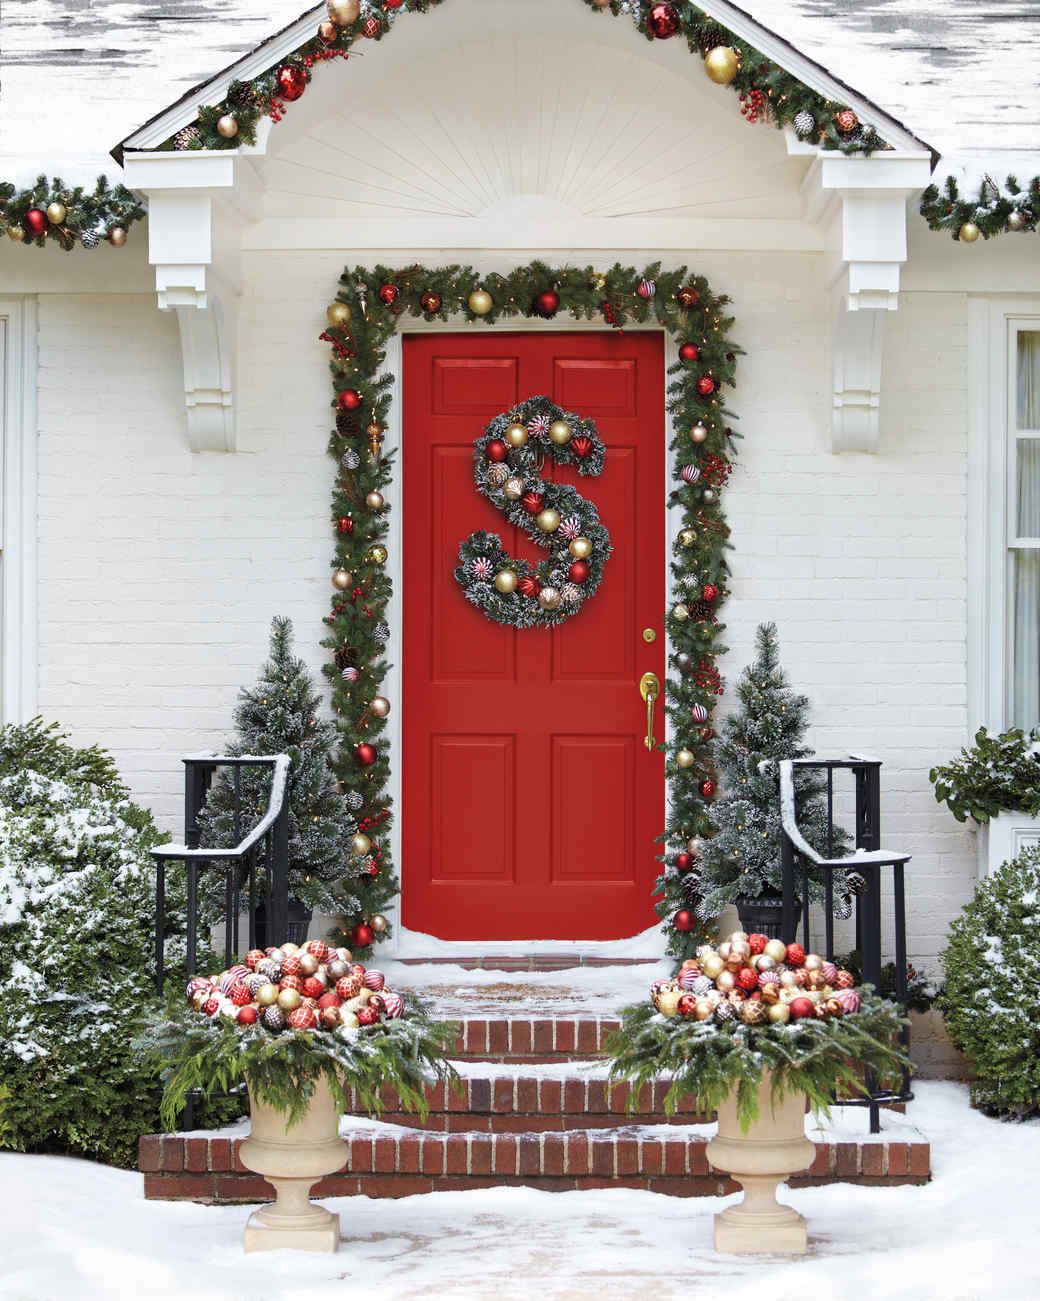 Dazzle Your Door: 10 Fast DIY Projects for Door Upgrades| Door Decor, Door Decor Ideas, How to Decorate Your Door, Door Decoration, Porch Decor, How to Decorate Your Porch, Porch DIYs